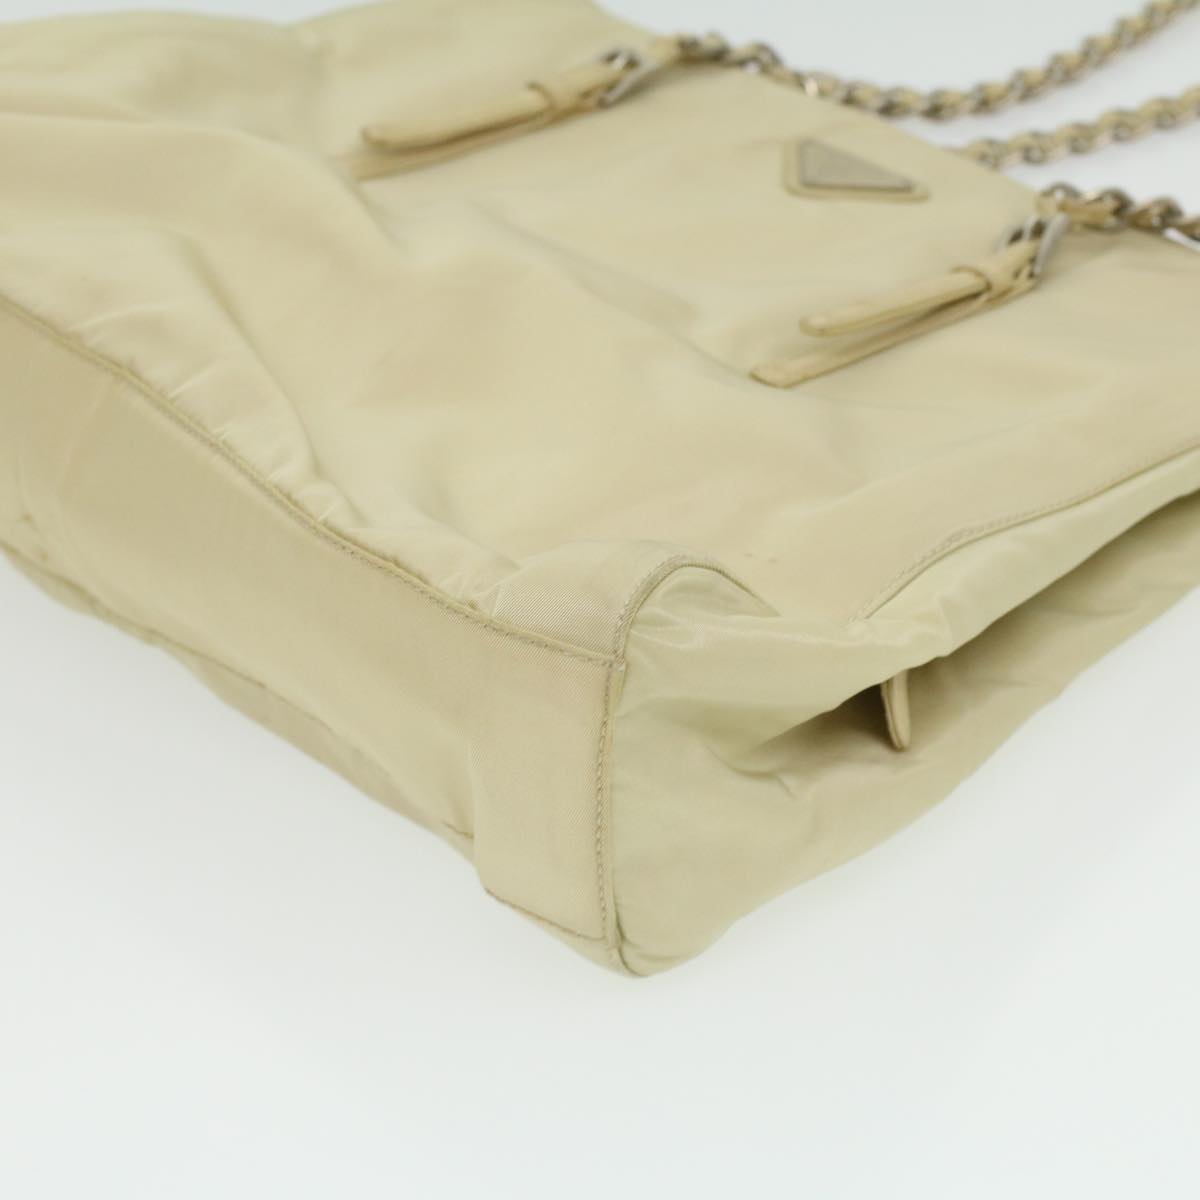 PRADA Chain Shoulder Bag Nylon Beige Auth ac1622